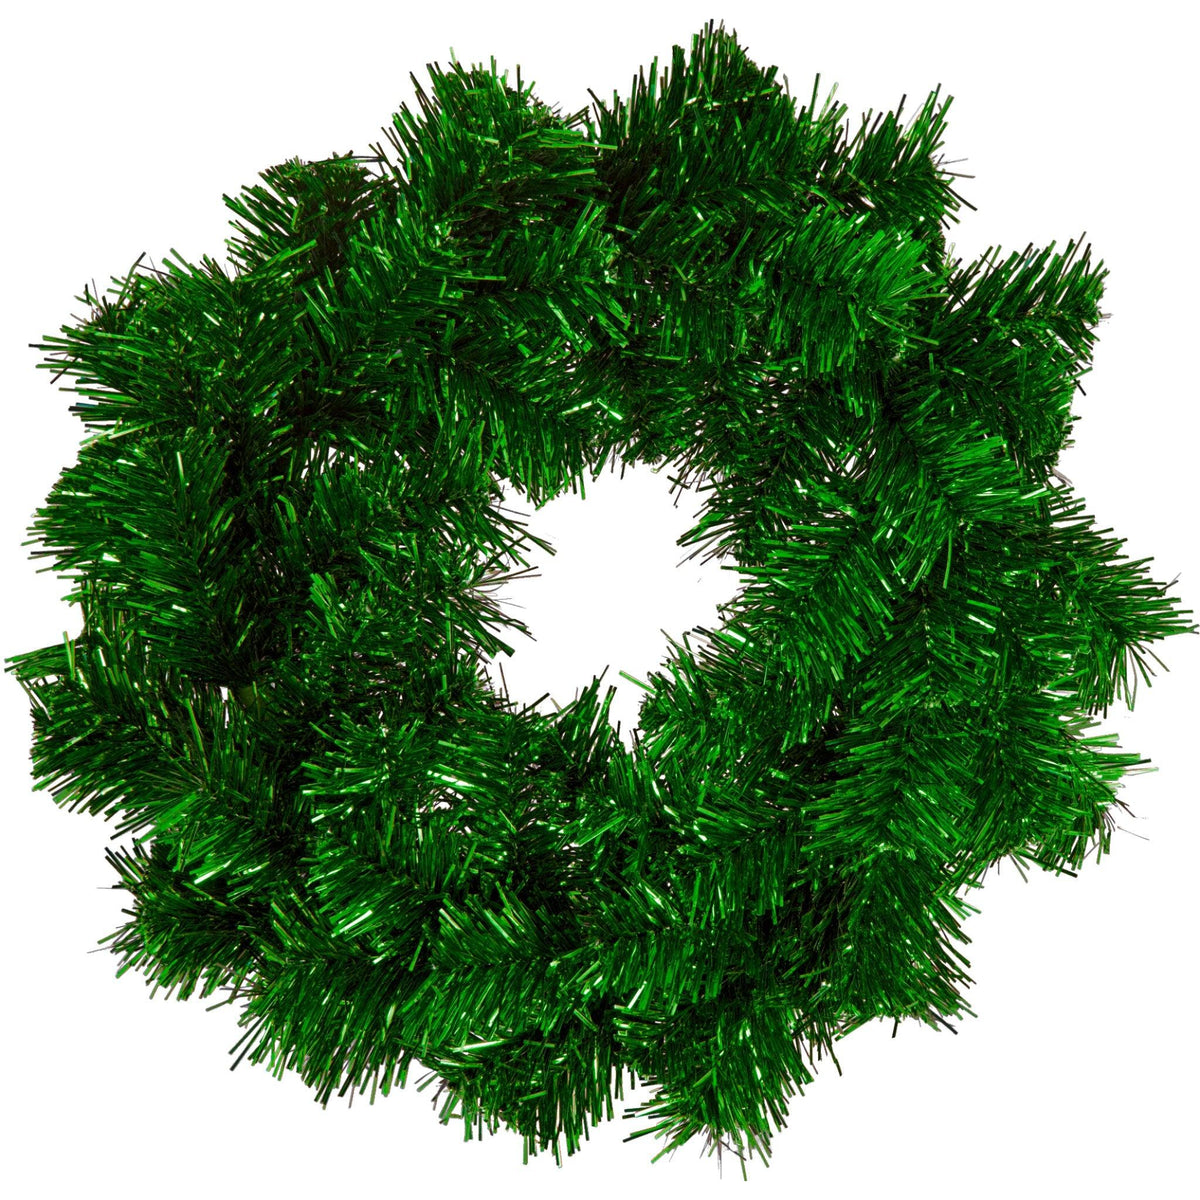 18IN Shiny Metallic Green Tinsel Christmas Wreaths! Decorative 18in Diameter door hanging wreaths made by Lee Display.